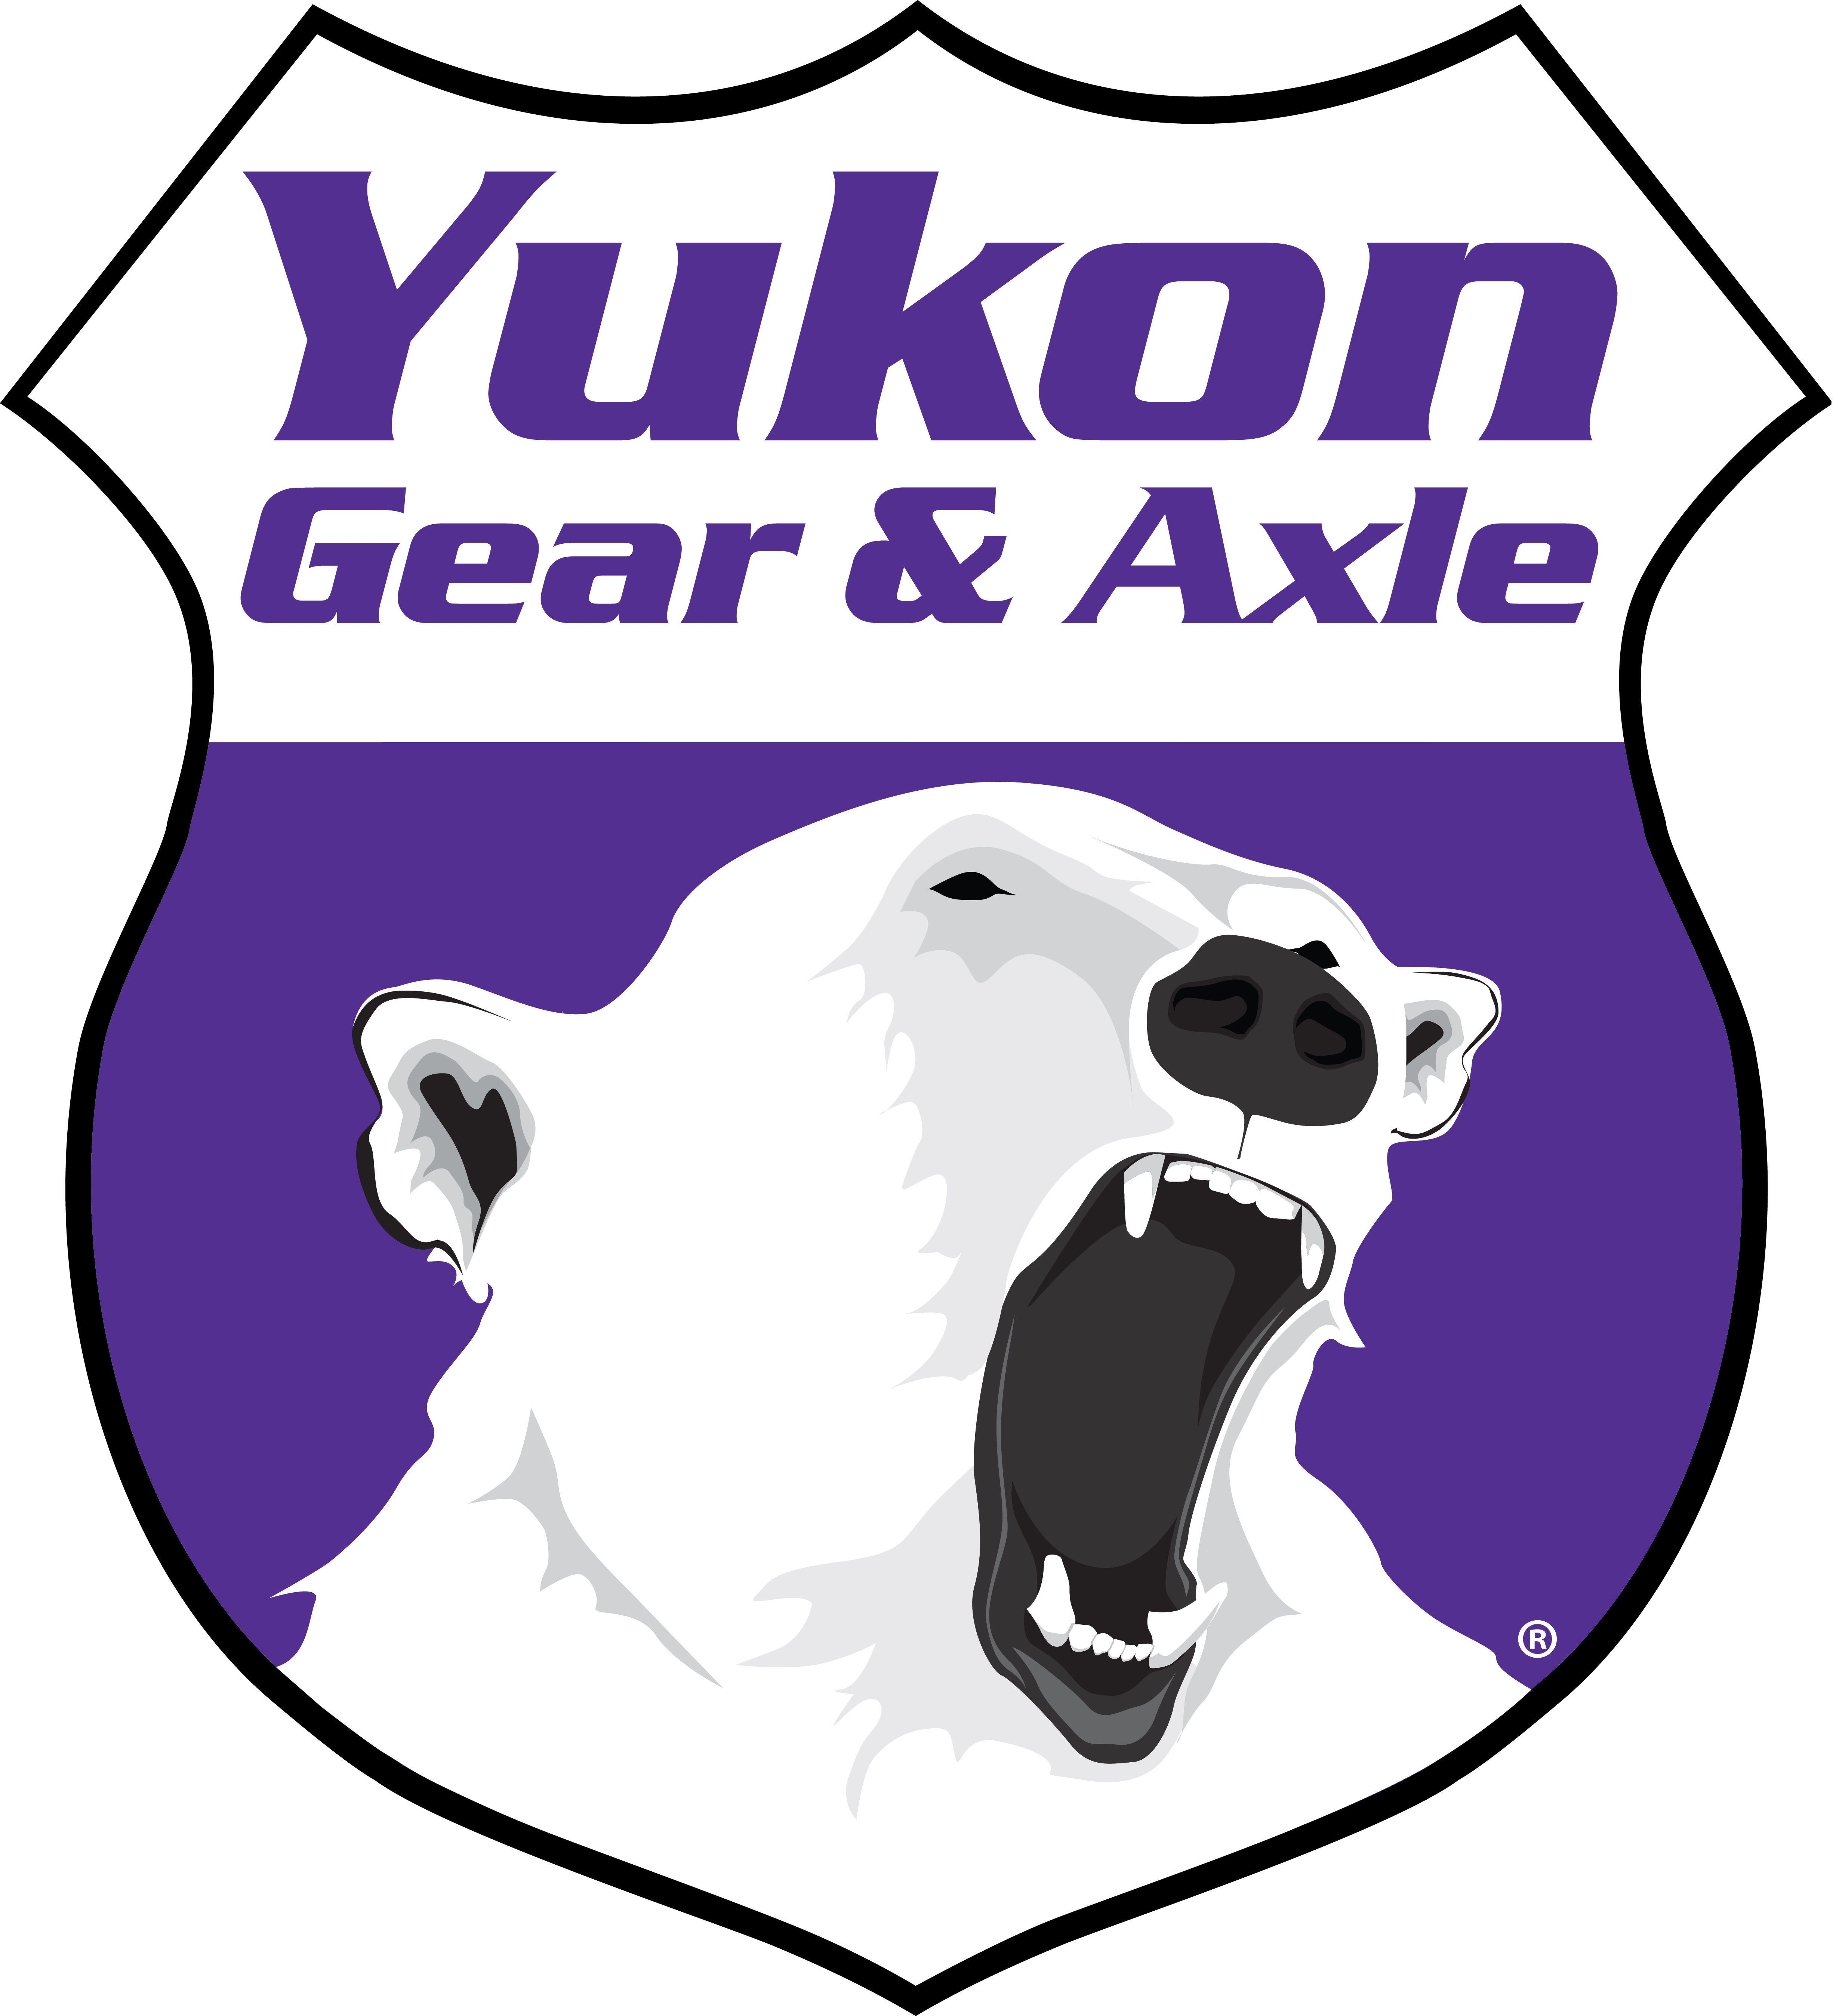 Yukon Master Overhaul kit for Dana 70-U differential 